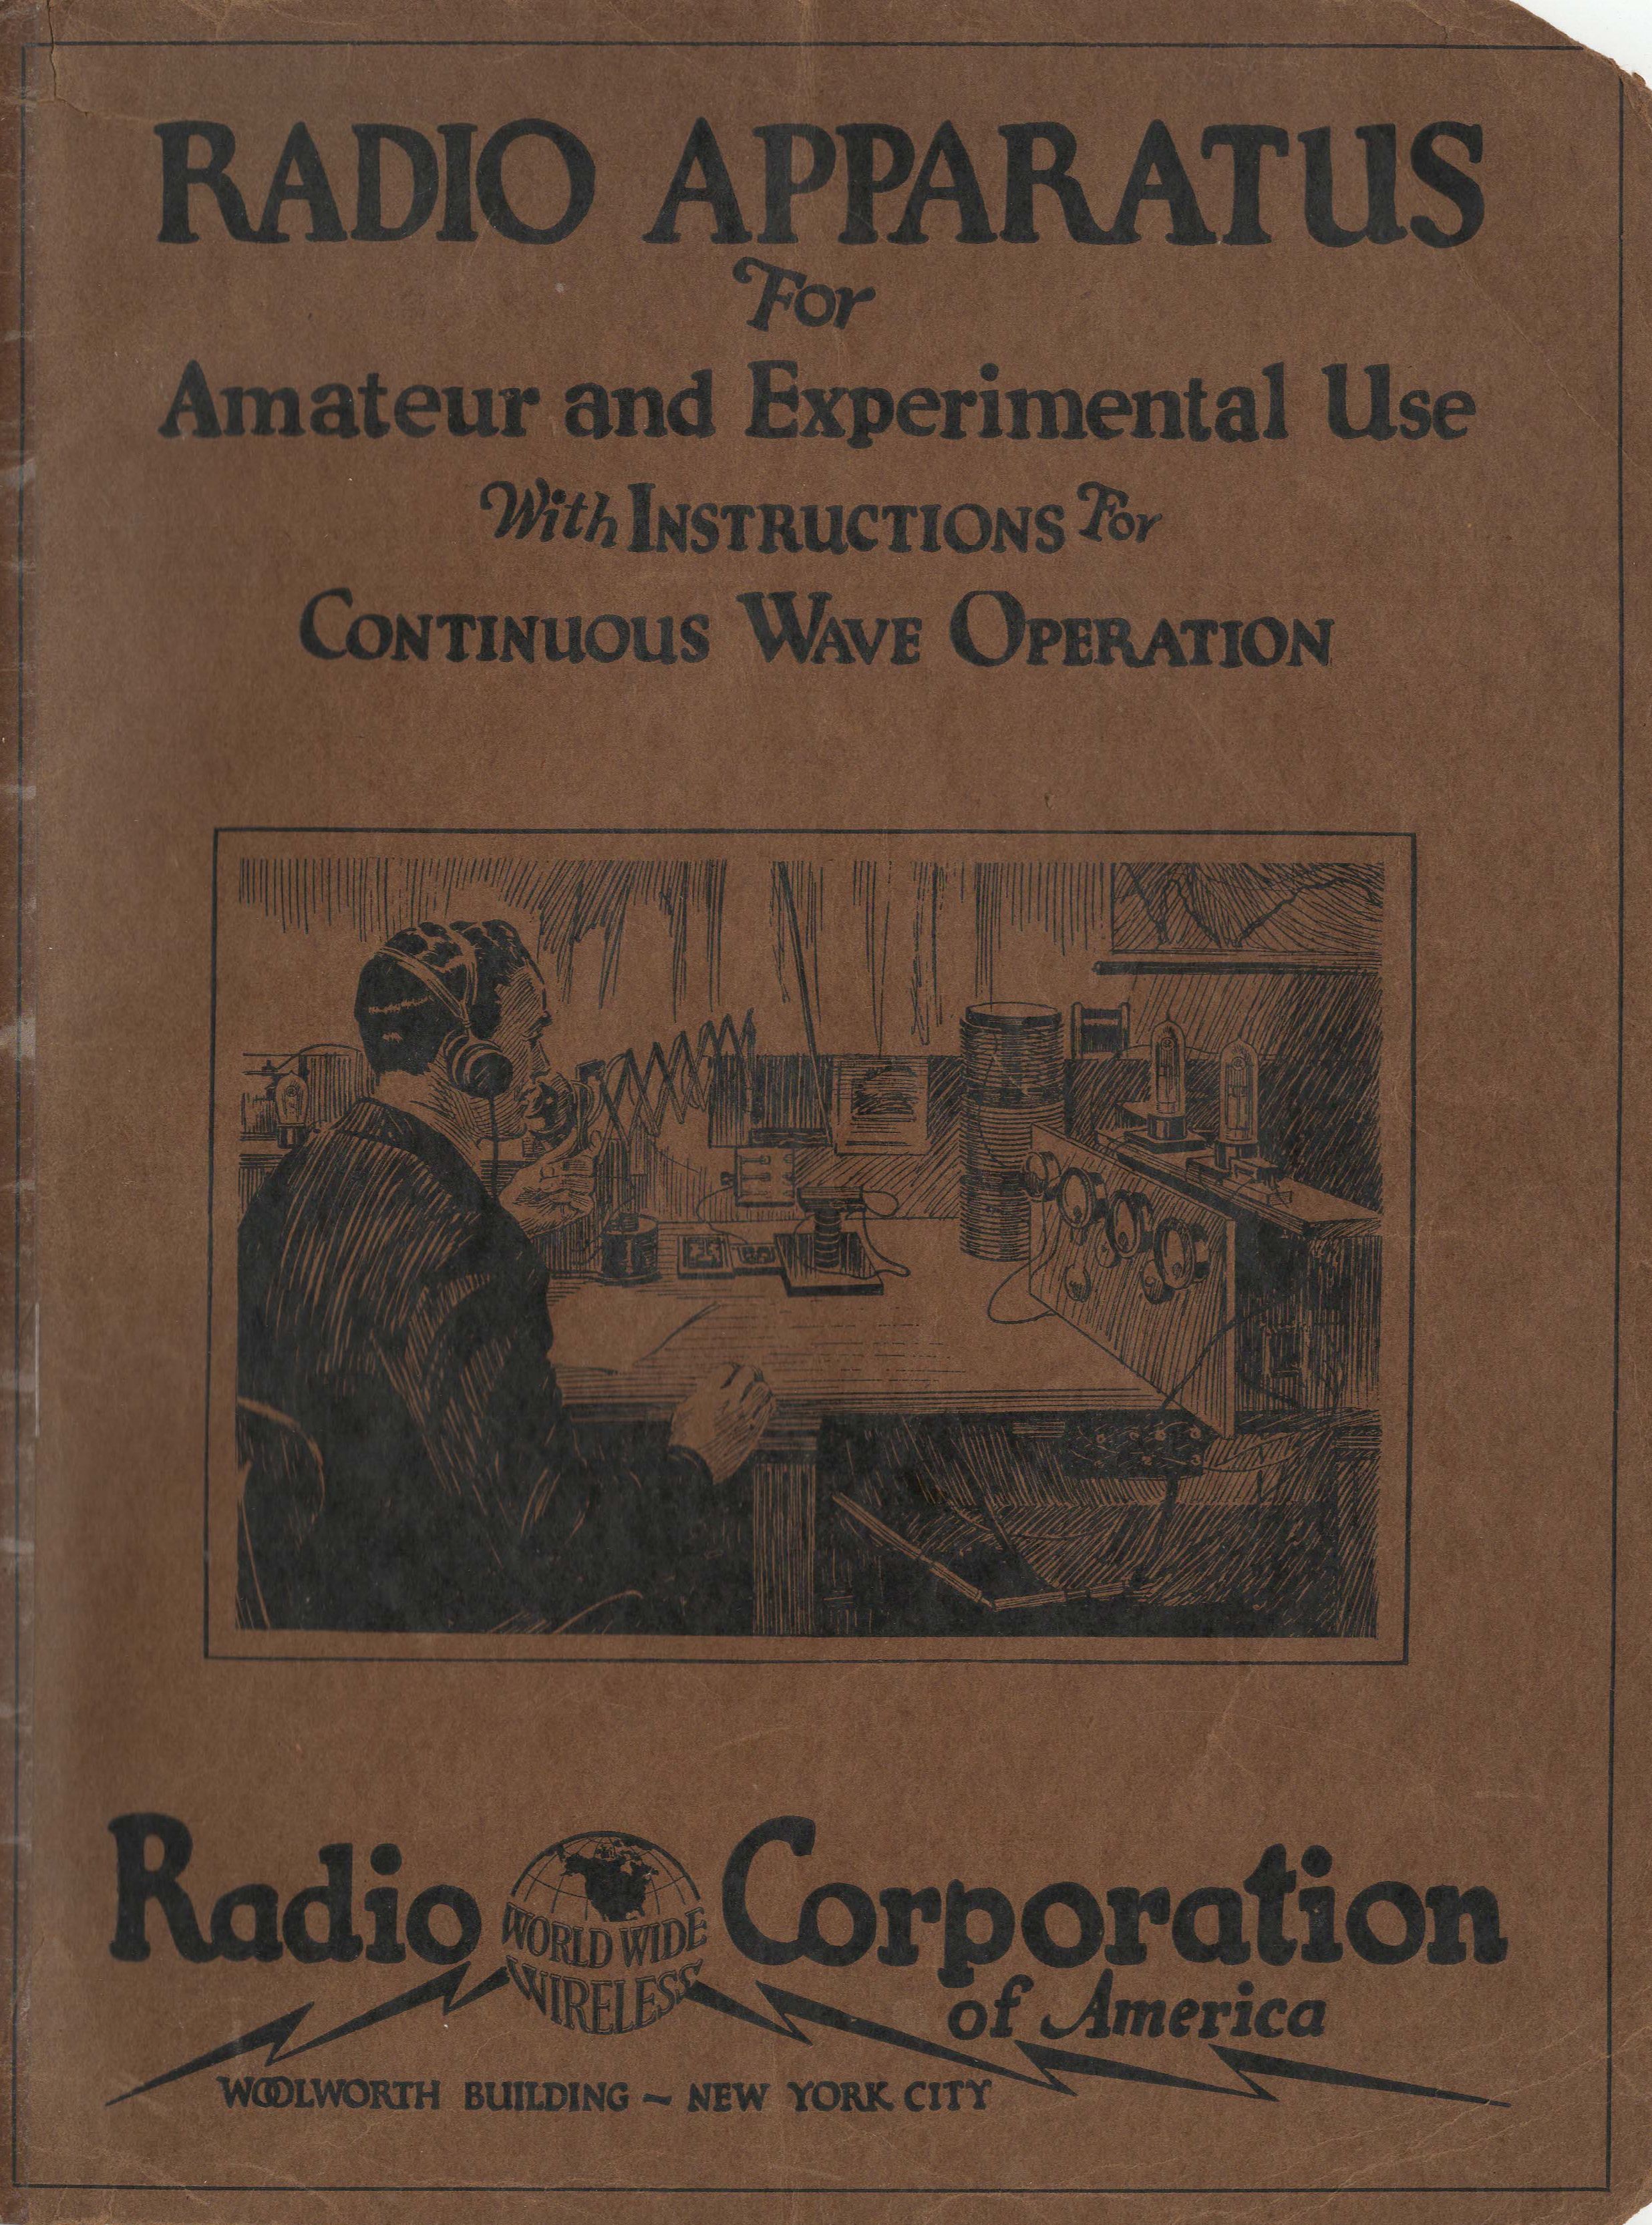 RCA Apparatus Catalog